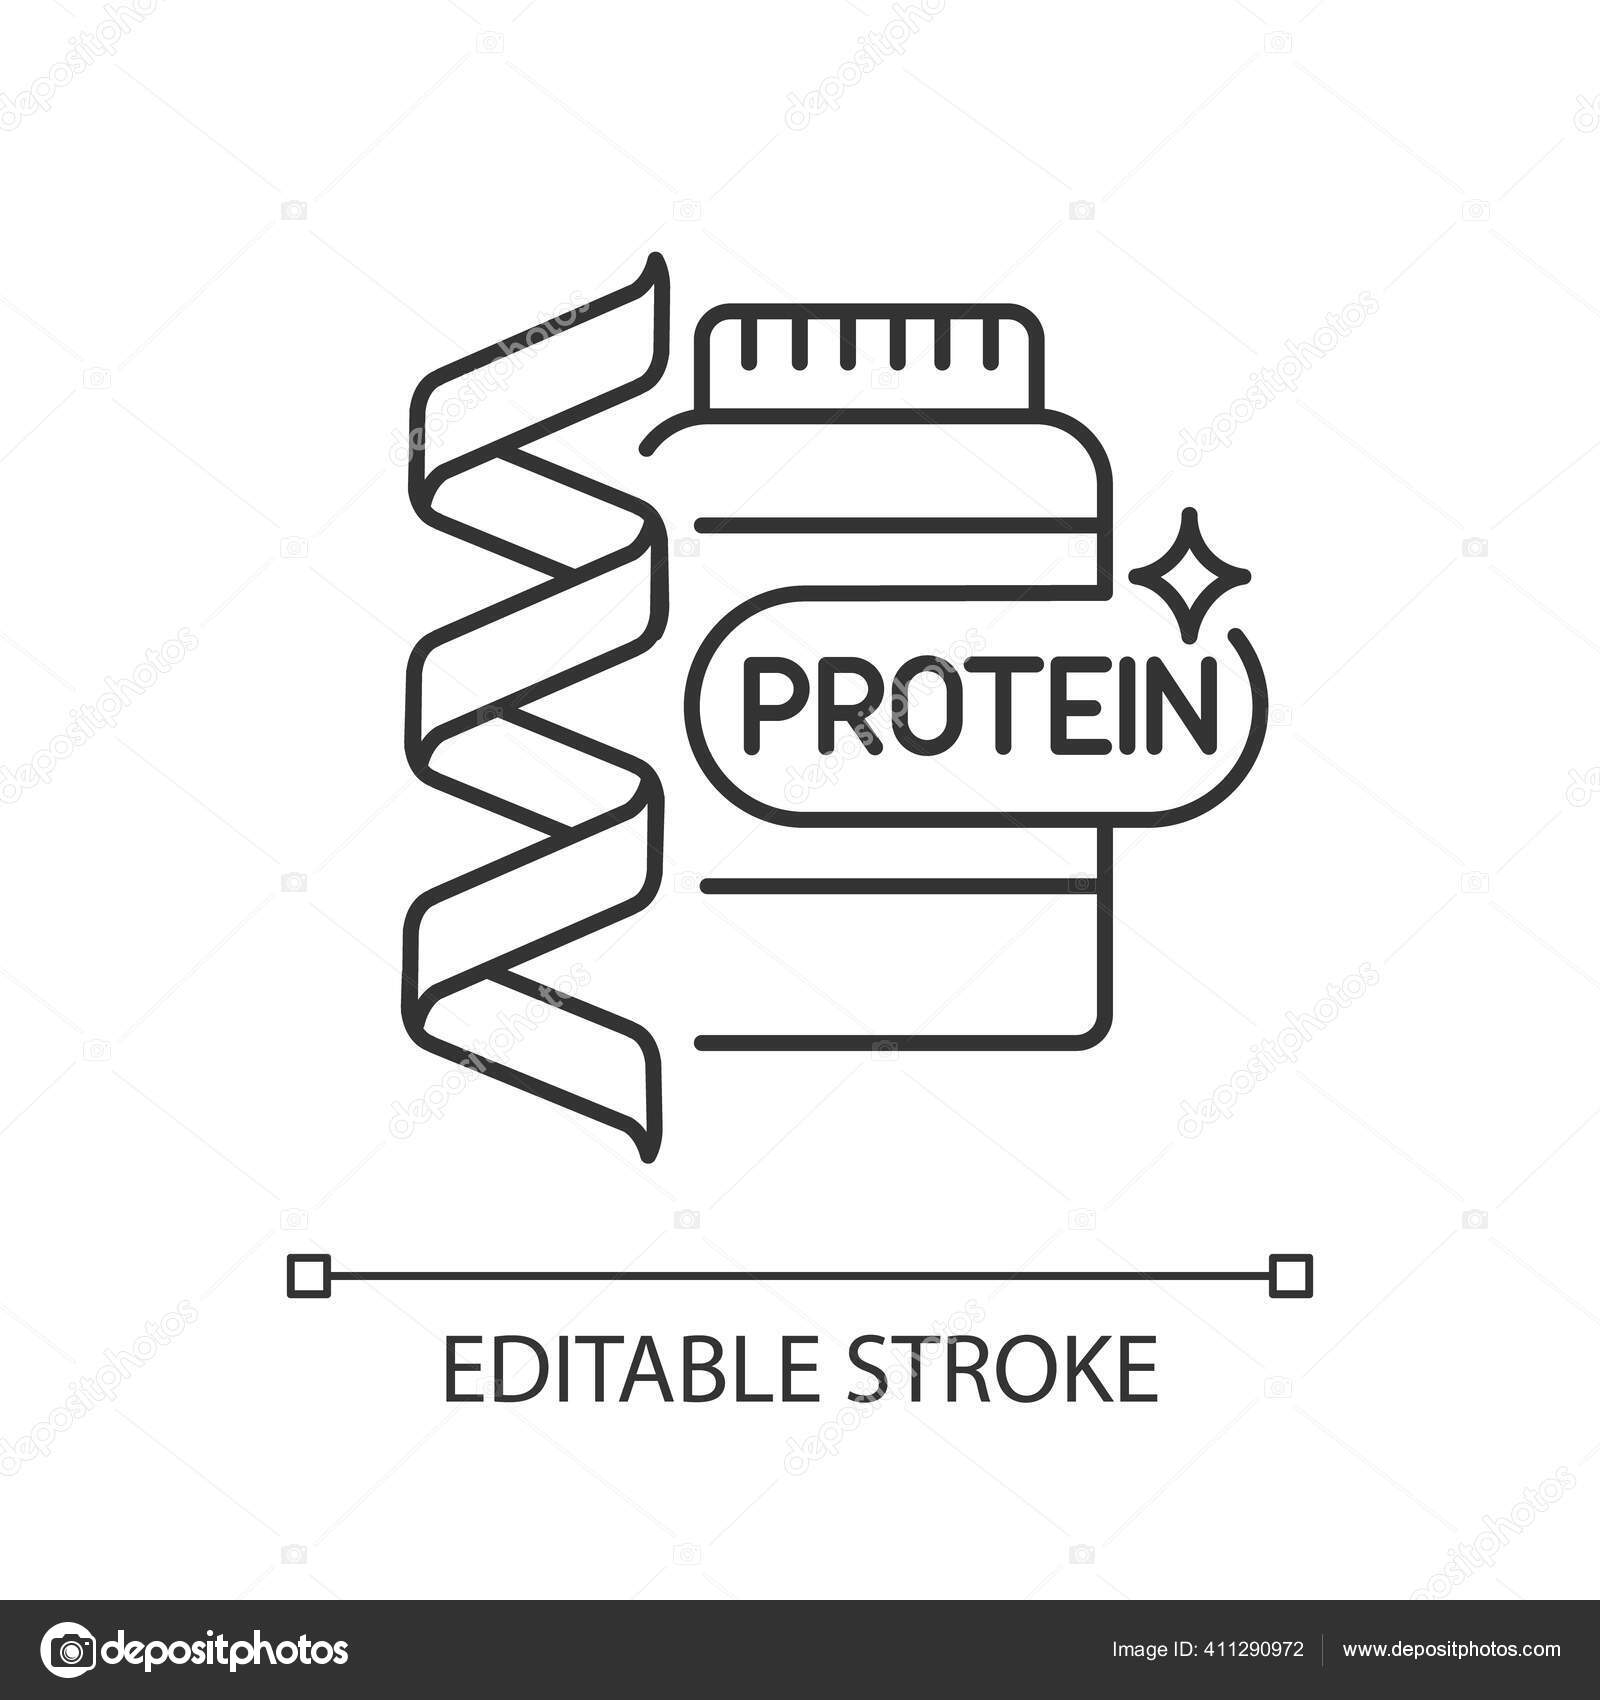 https://st4.depositphotos.com/4177785/41129/v/1600/depositphotos_411290972-stock-illustration-protein-linear-icon-supplement-fitness.jpg